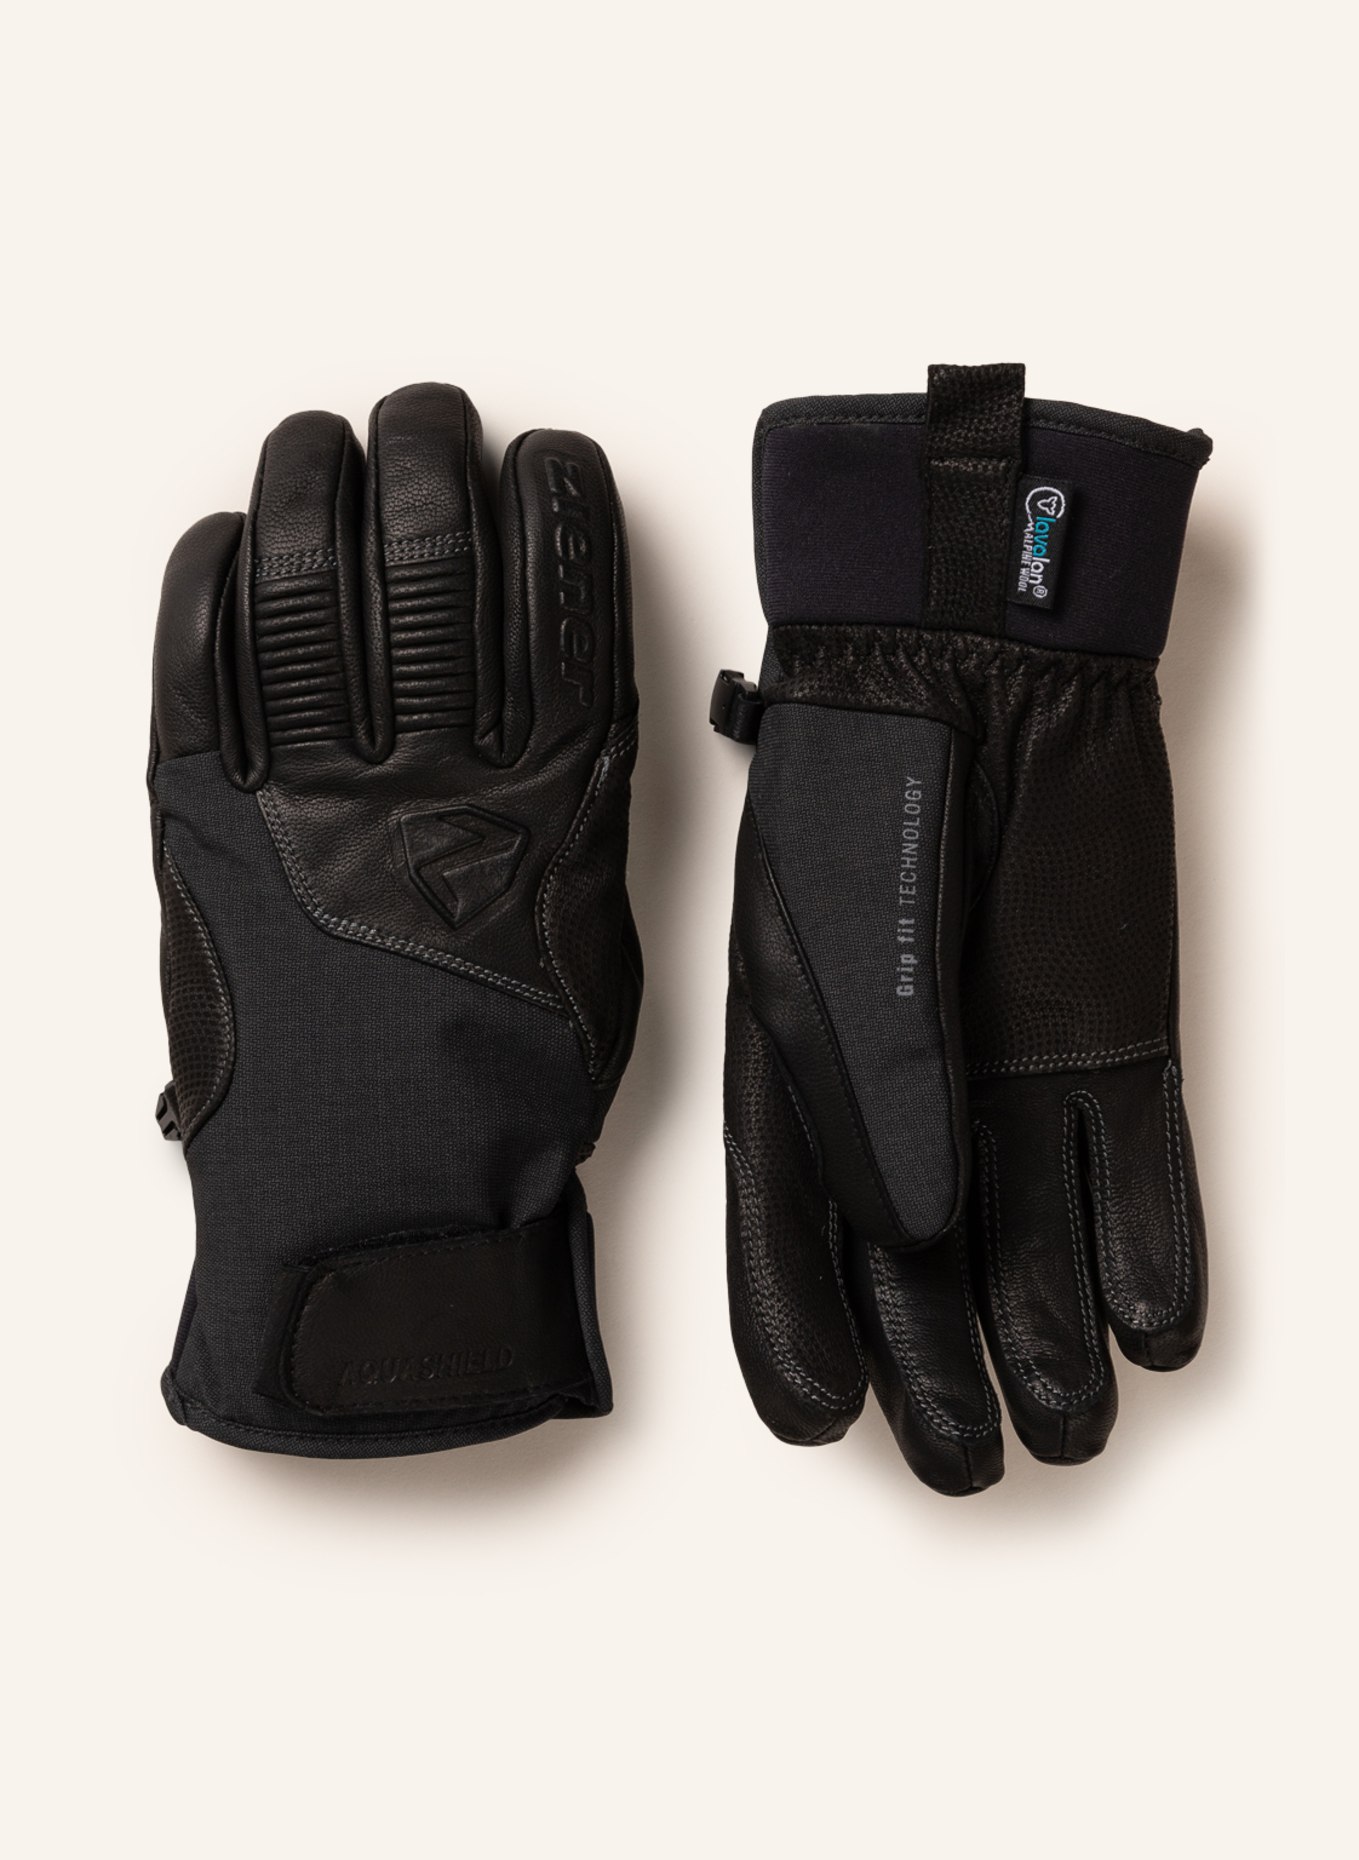 GANZENBERG dark black/ Ski in gloves ziener gray